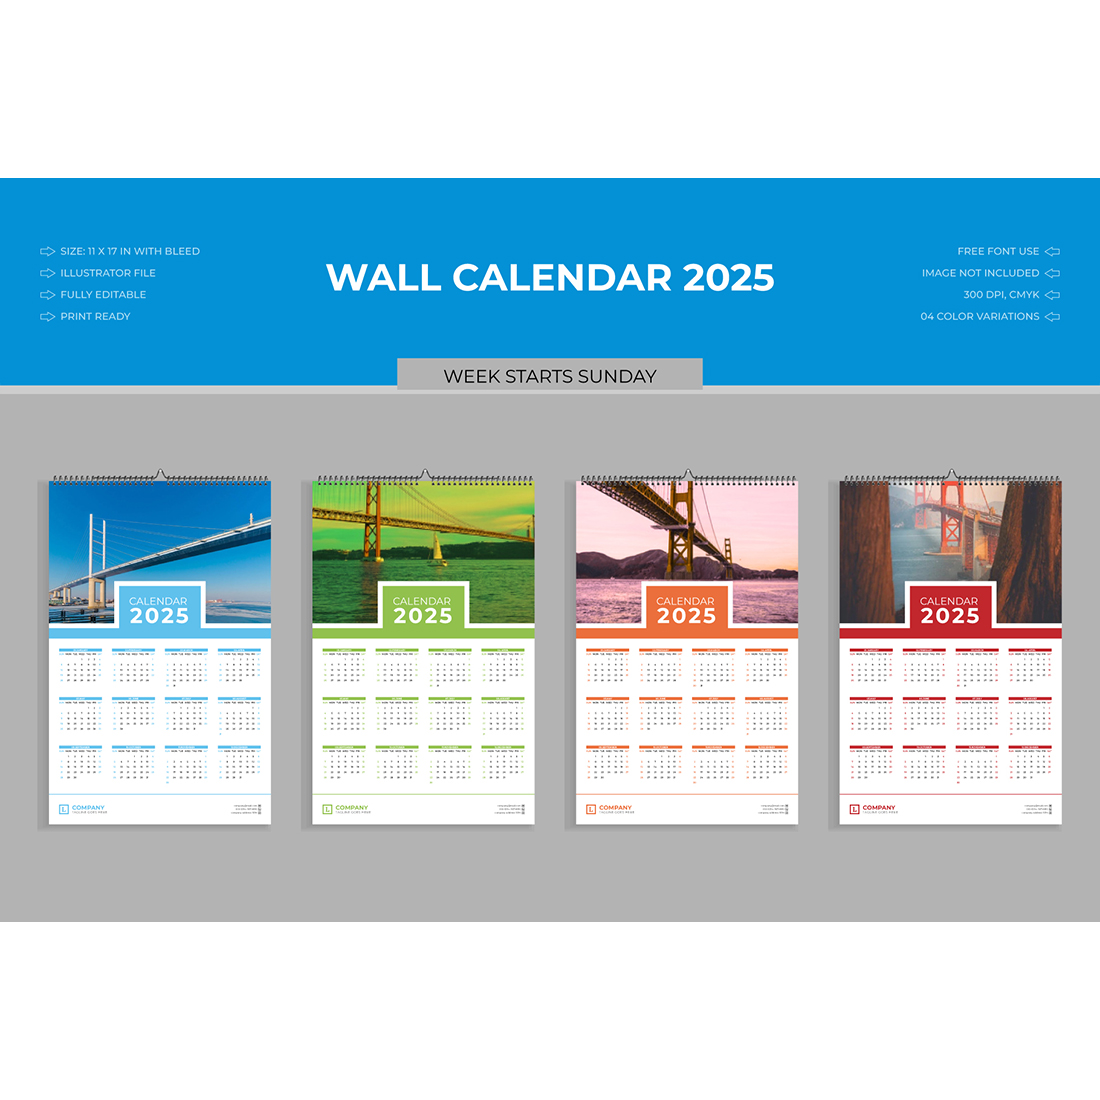 Wall Calendar Design 2025 preview image.